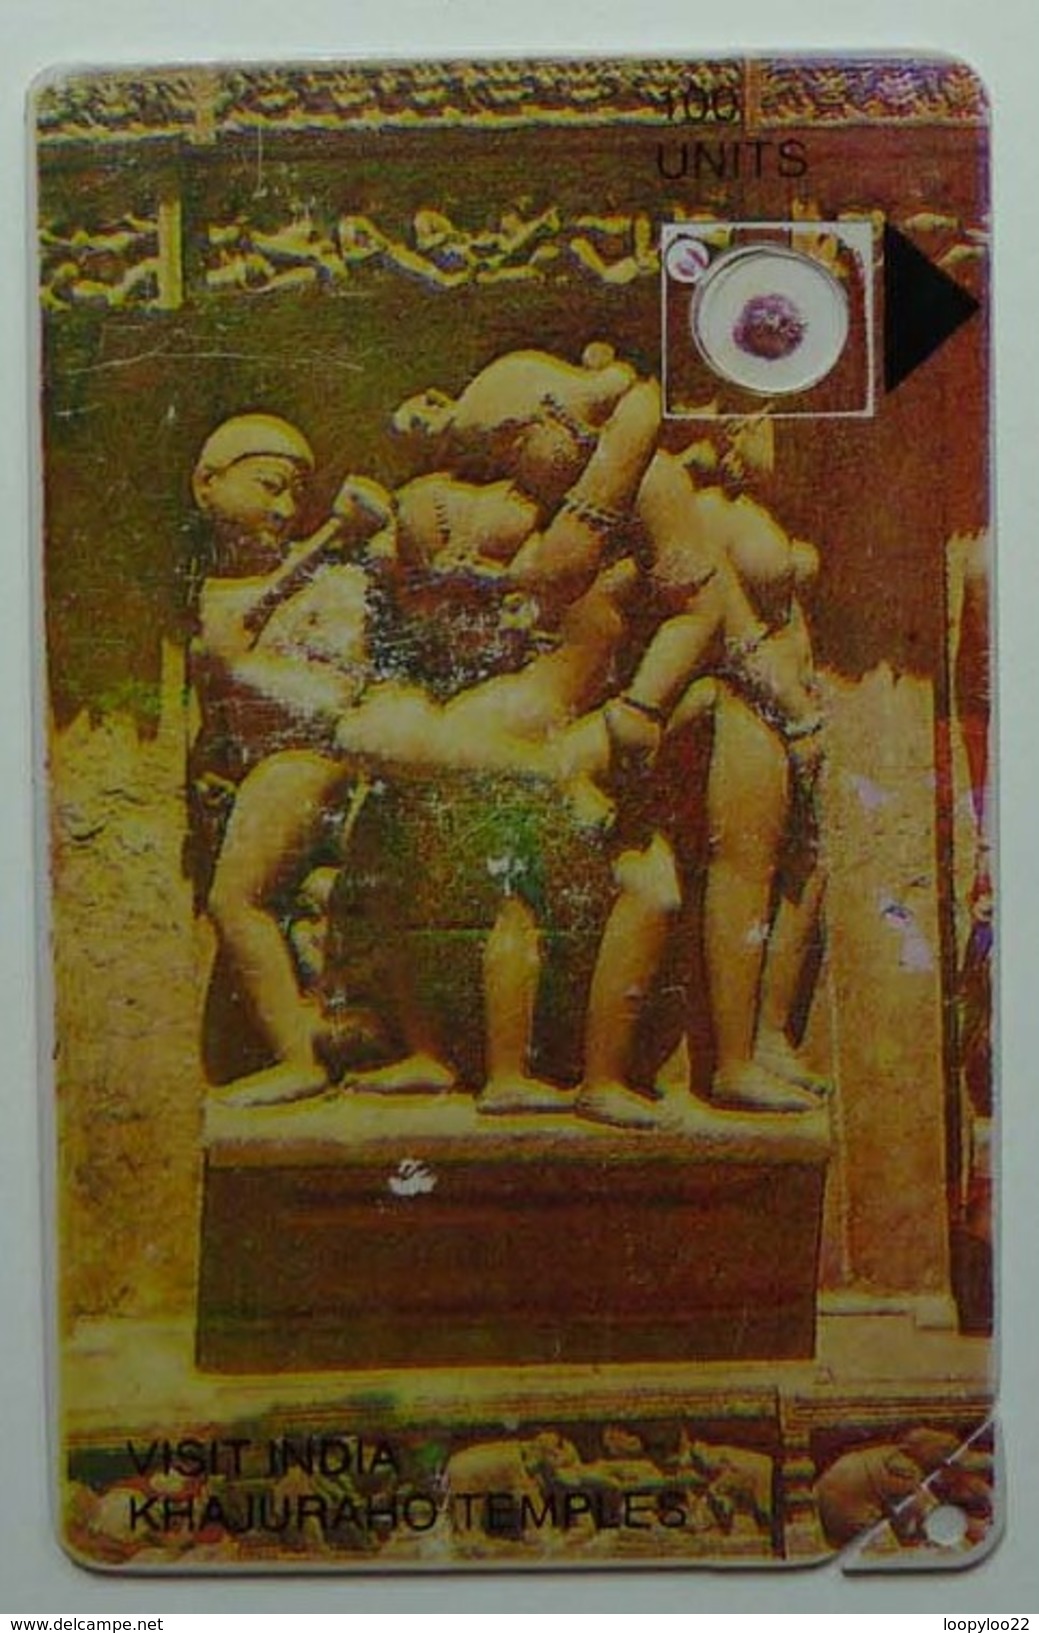 INDIA - 100 Units - Specimen - Very Early Aplab - Visit India Khajuraho Temples - RRR - Inde